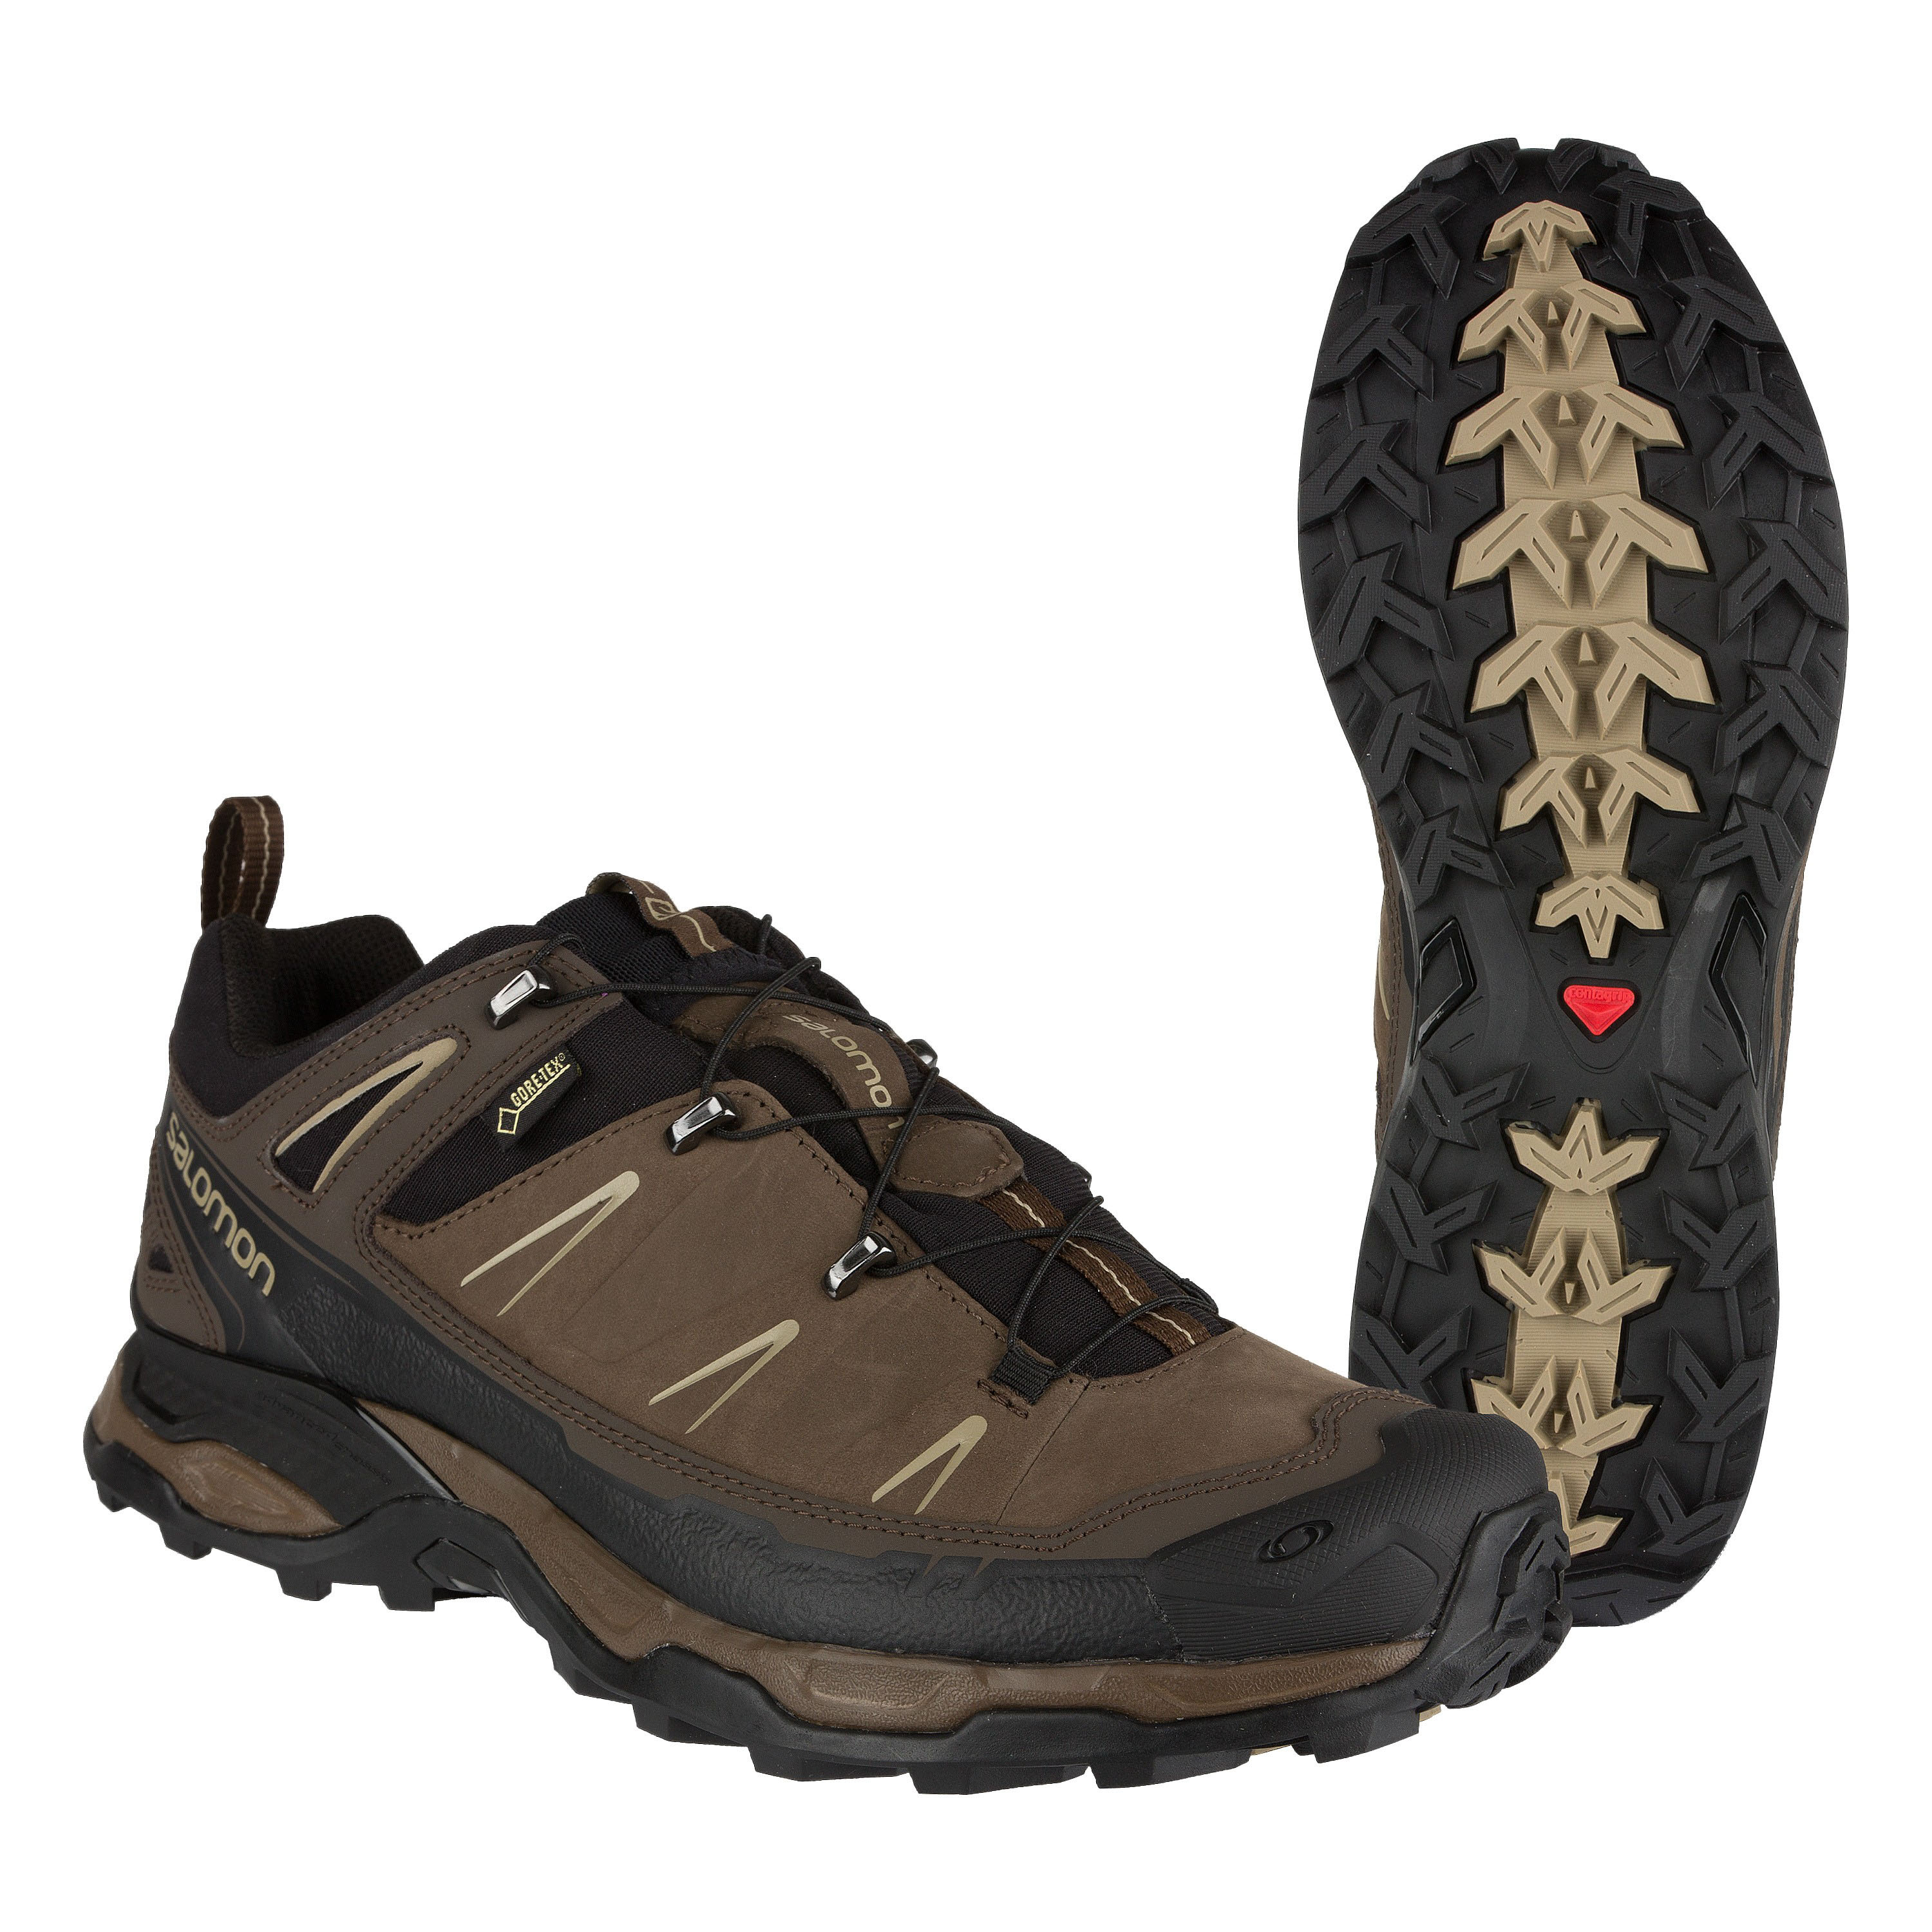 Salomon X Ultra LTR GTX brown | Salomon X Ultra LTR GTX brown | Hiking | Shoes | Footwear | Clothing